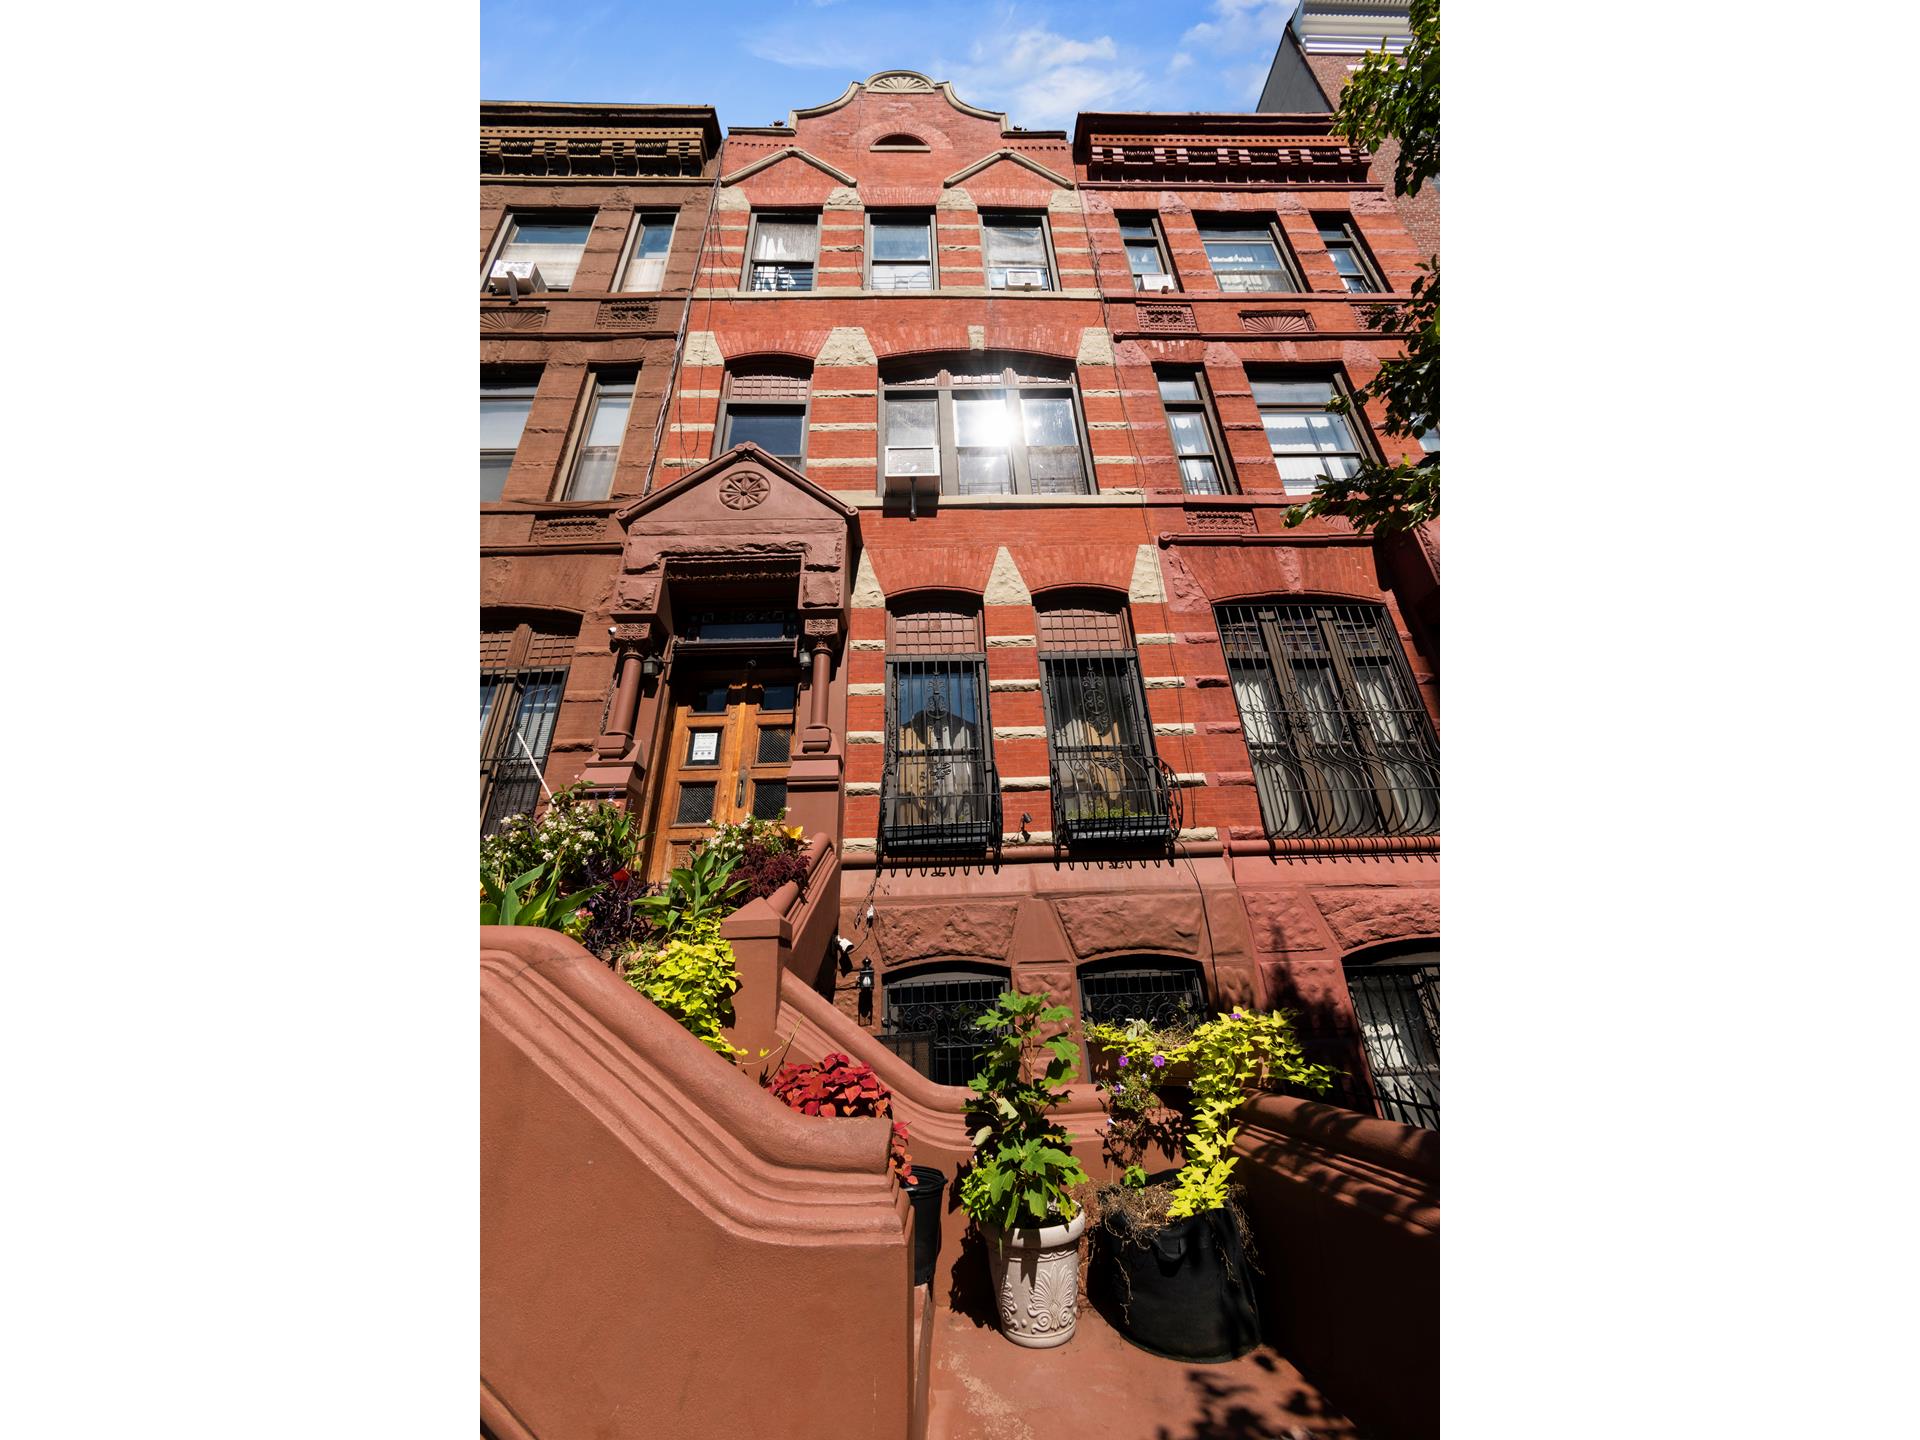 207 West 122nd Street, South Harlem, Upper Manhattan, NYC - 5 Bedrooms  
3.5 Bathrooms  
12 Rooms - 